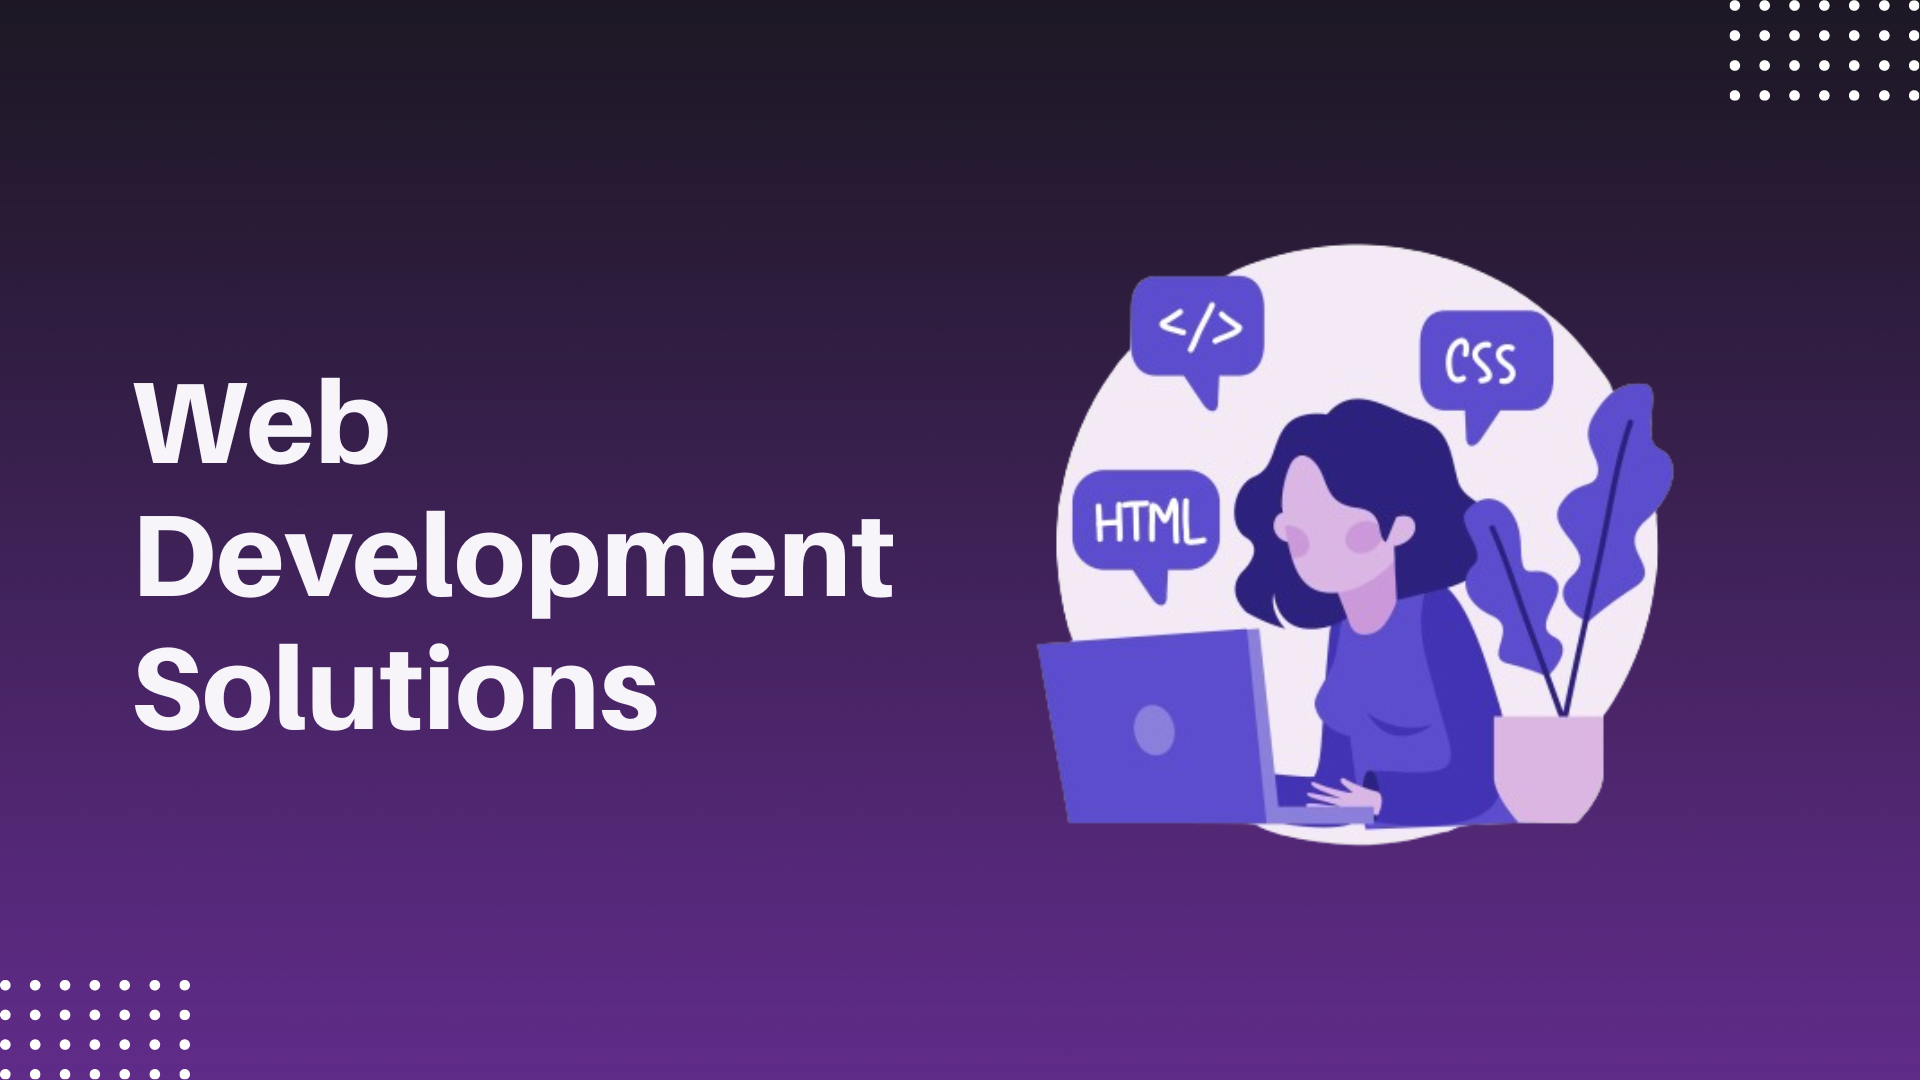 Web
Development
Solutions